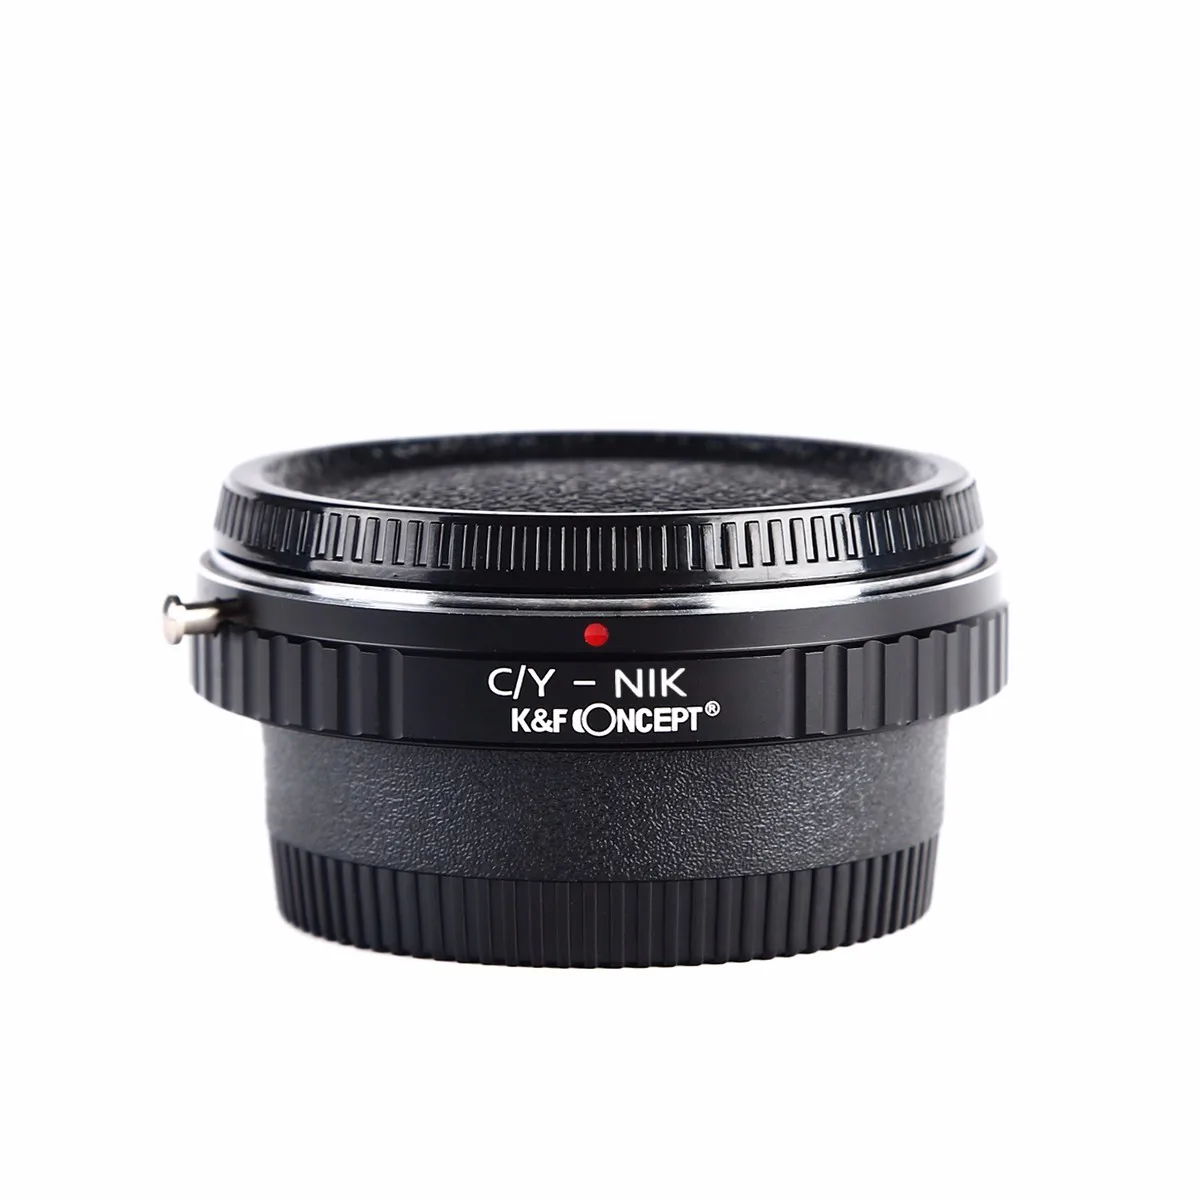 K& F концепция C/Y-NIKON кольцо адаптера объектива для Contax Yashica C/Y объектив для Nikon объектив камеры с оптическим стеклом